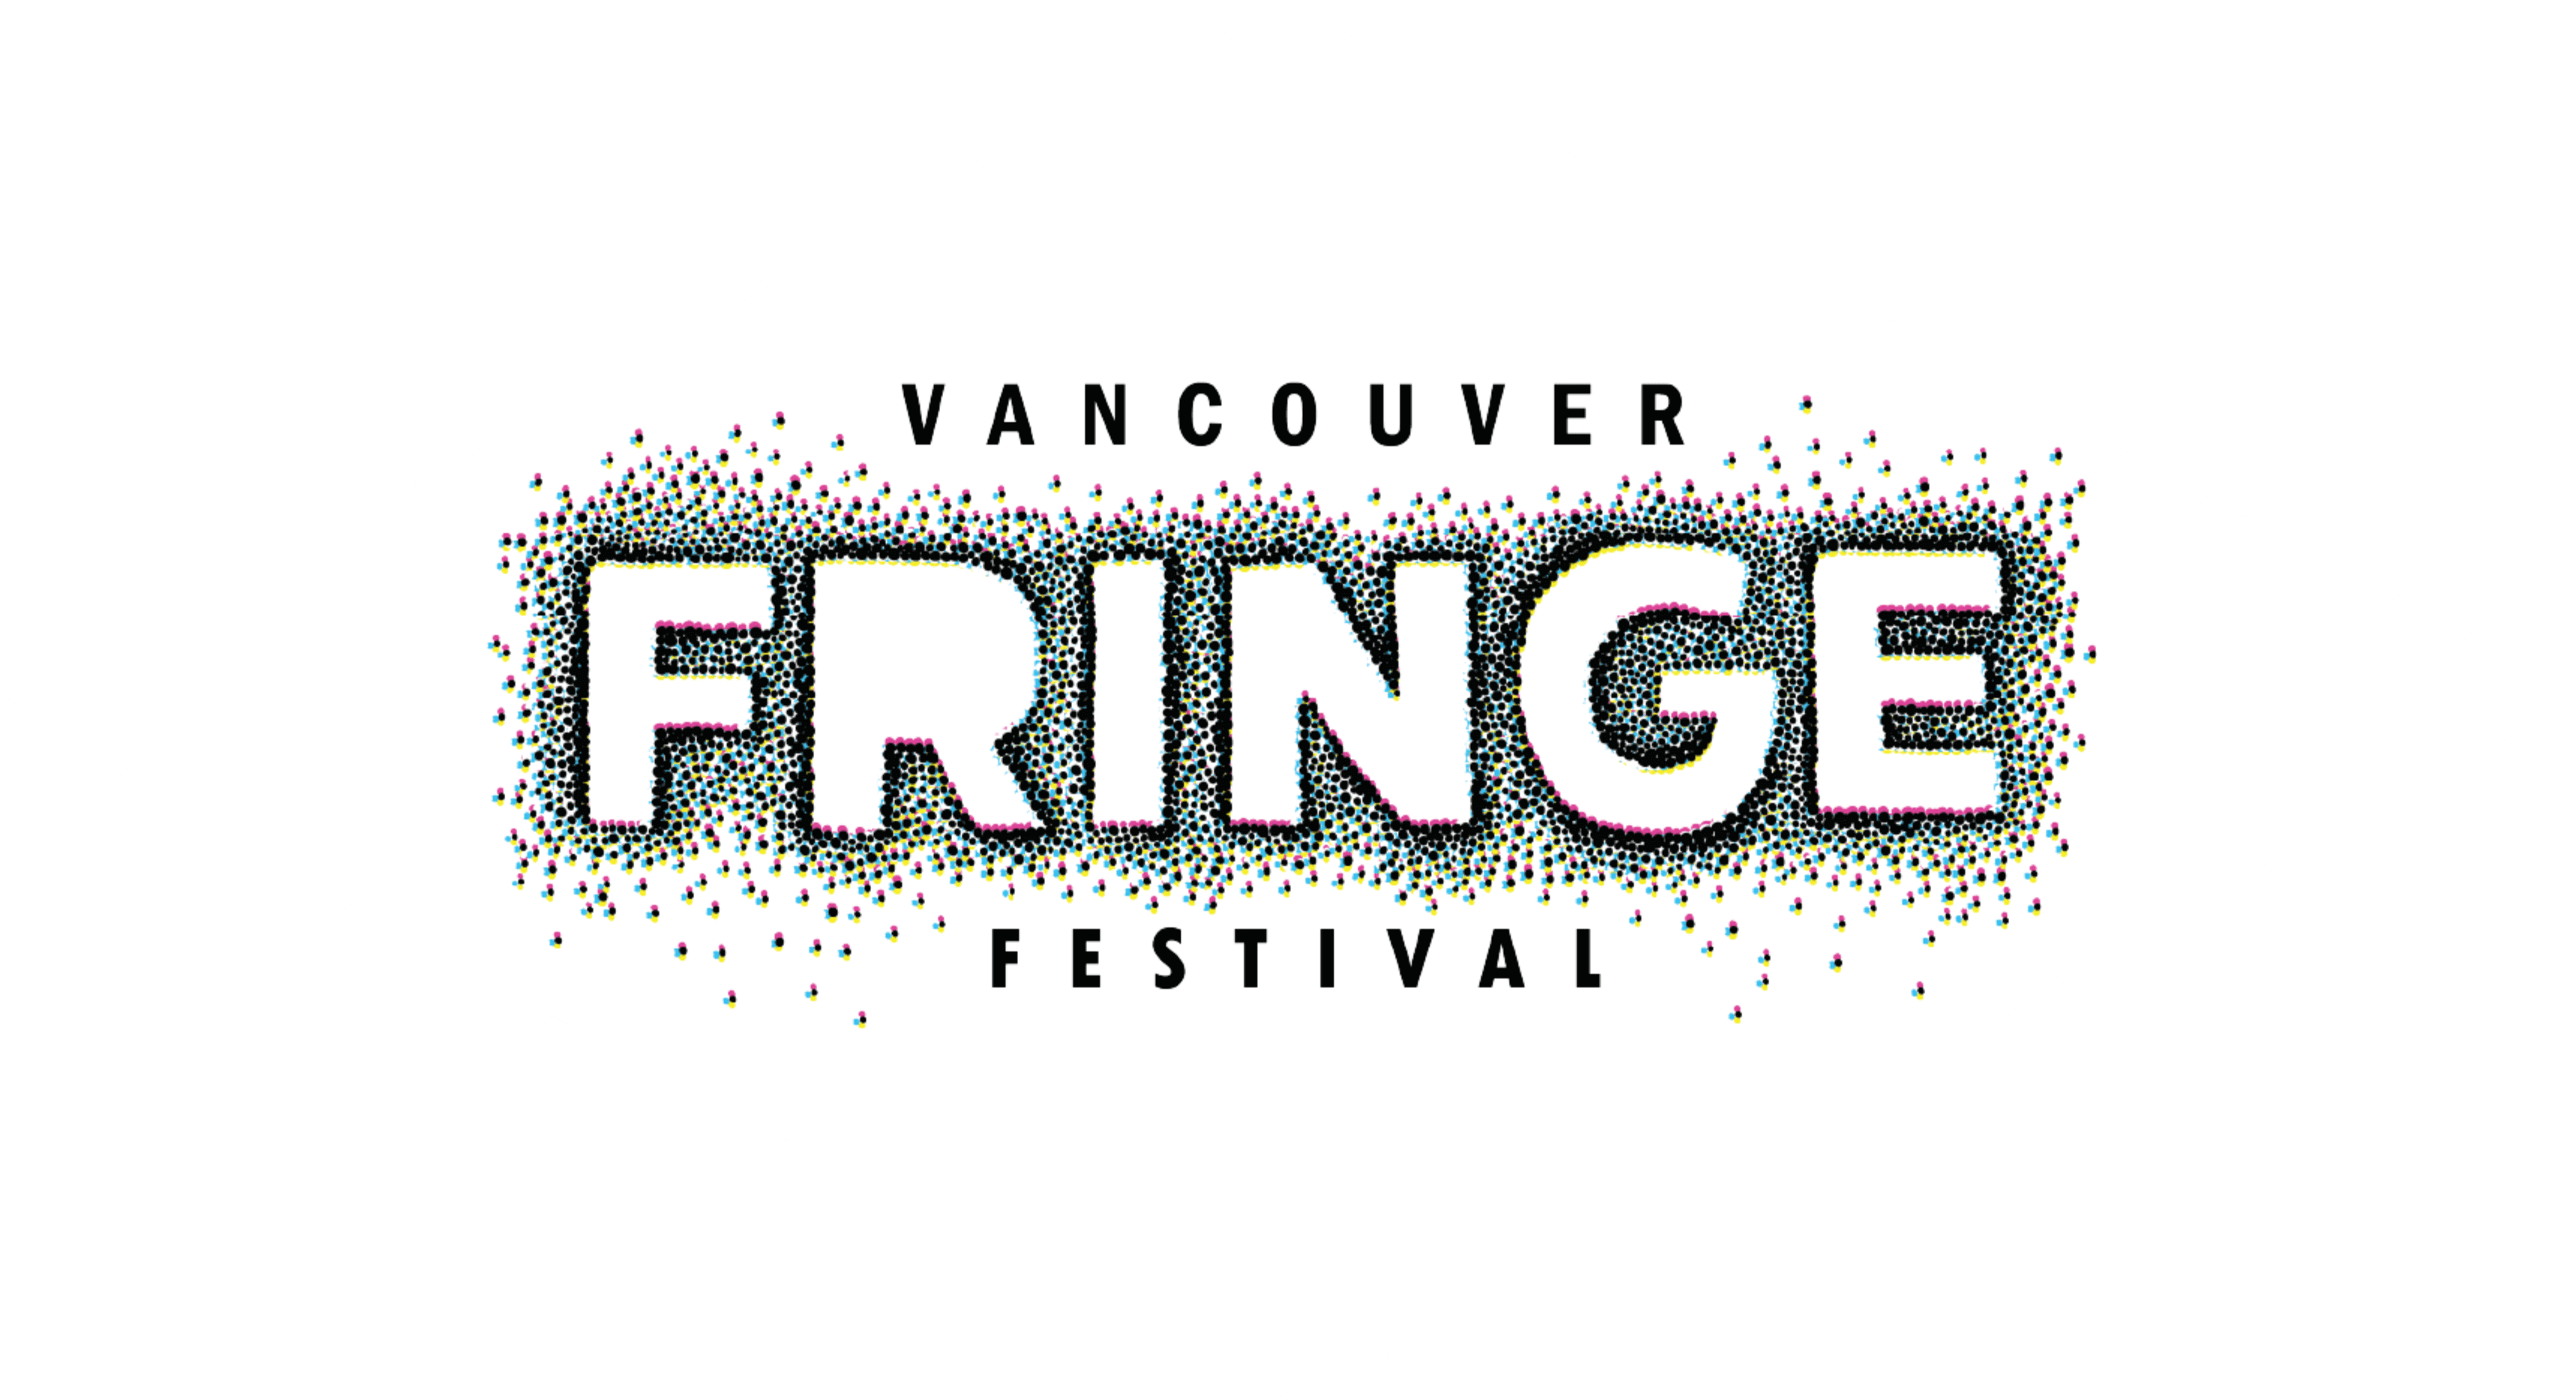 Vancouver Fringe Festival 